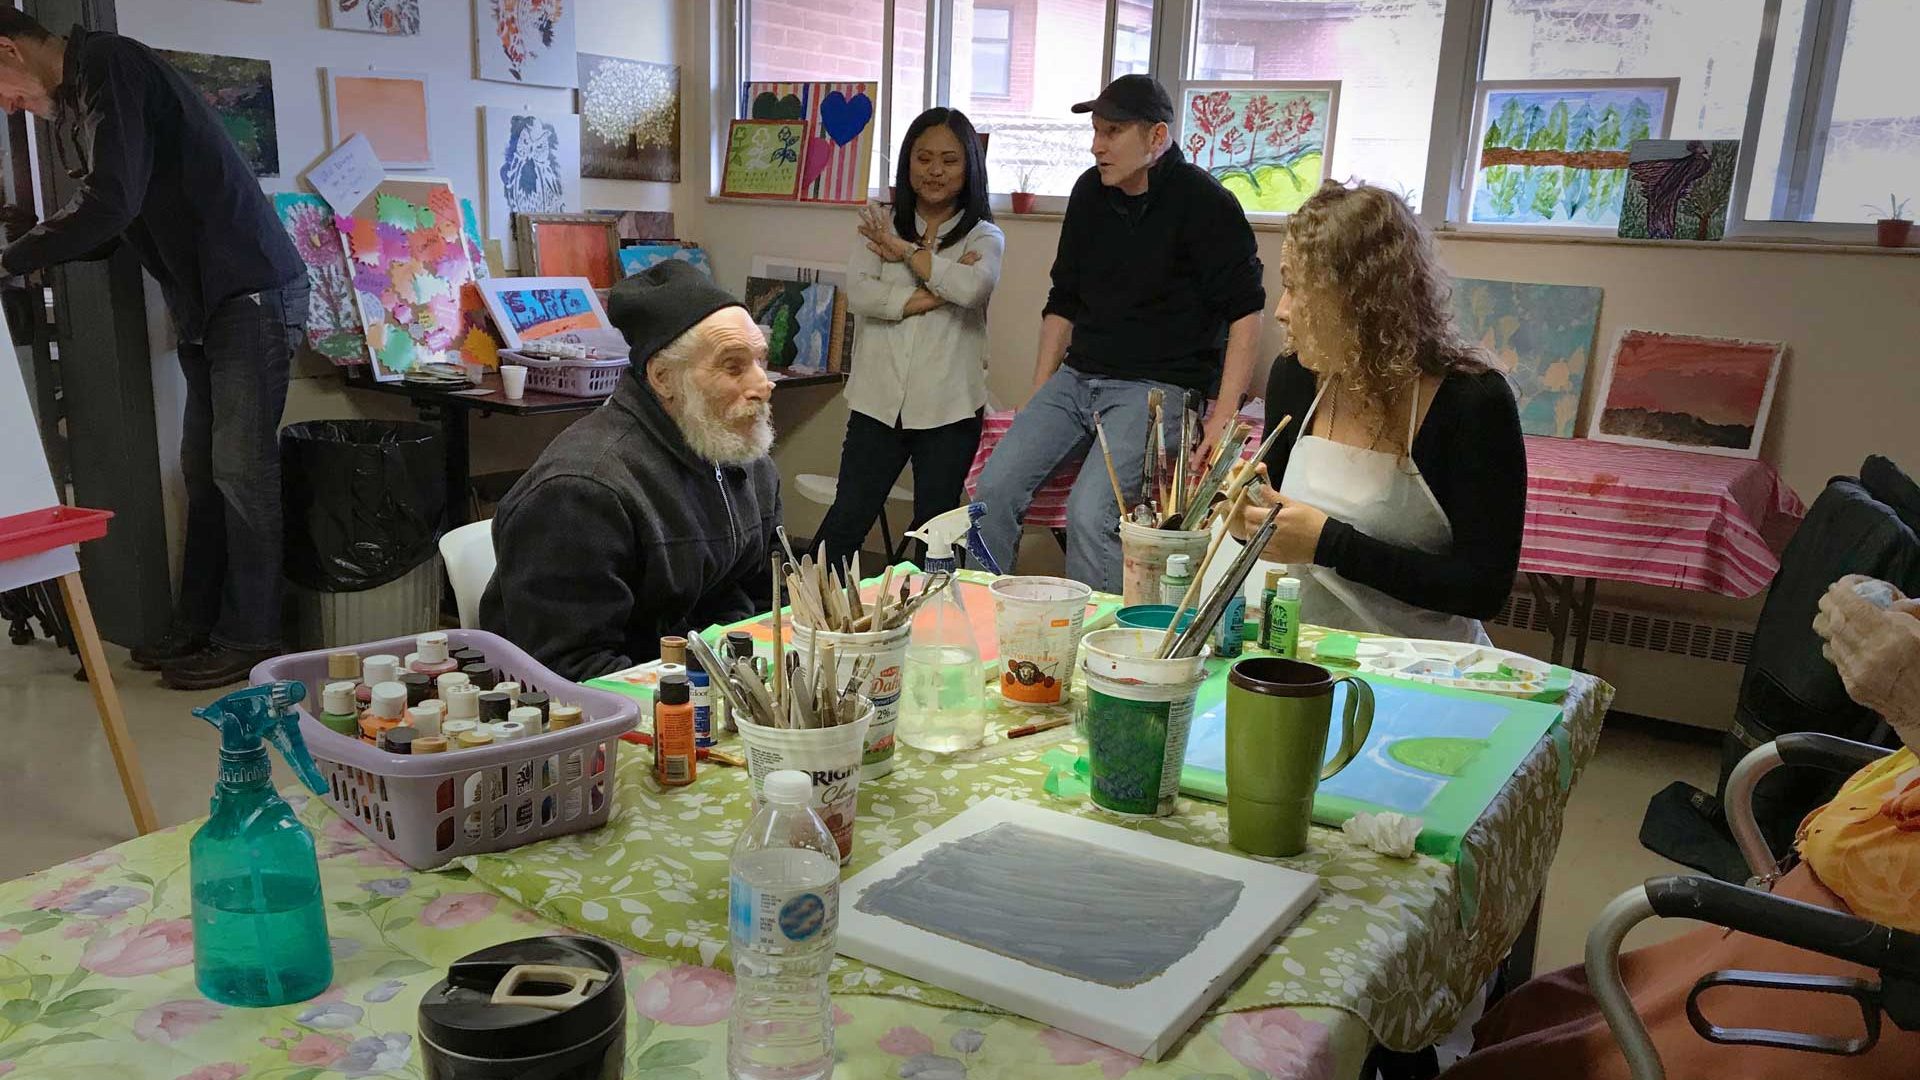 CBC OUR TORONTO Marivel visiting 220 Oak Street art studio to film segment